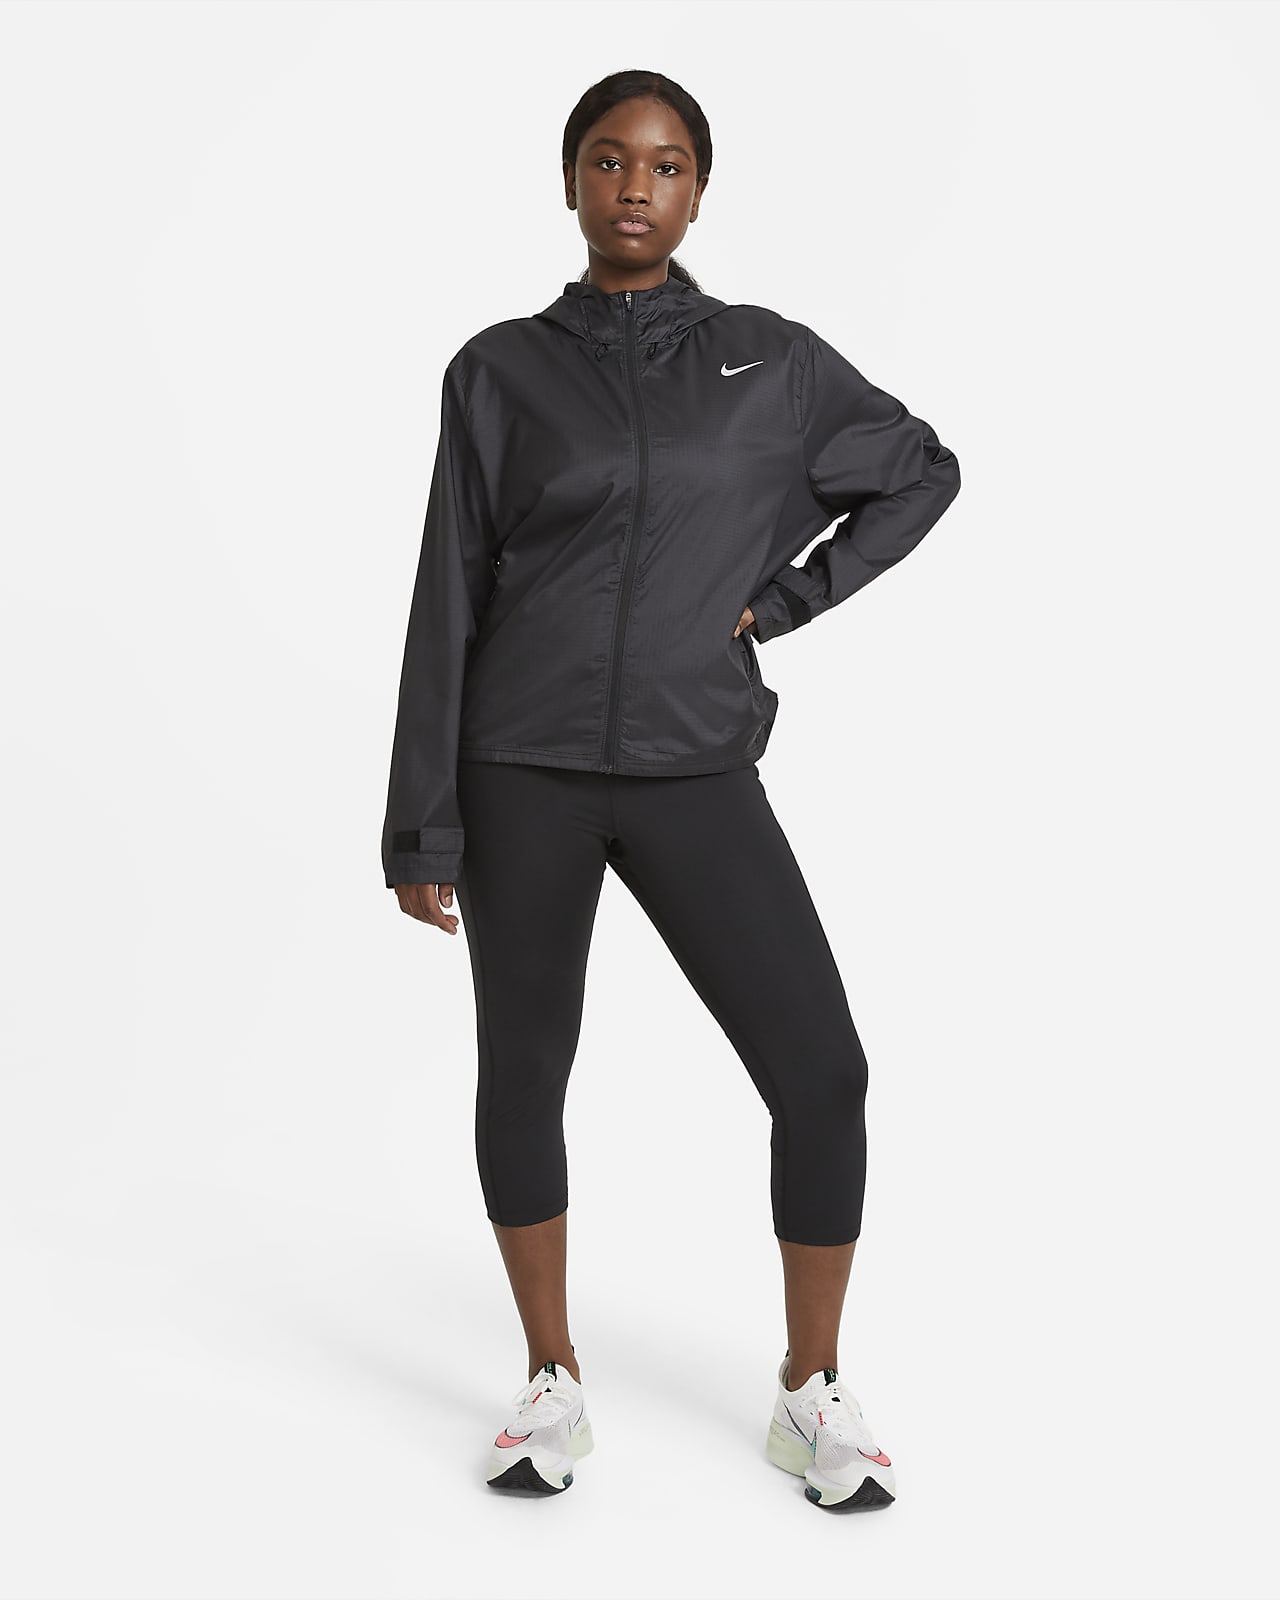 Nike Women's Plus Size Pro Tight Fit Cropped Leggings Black/Fireberry/White  1X